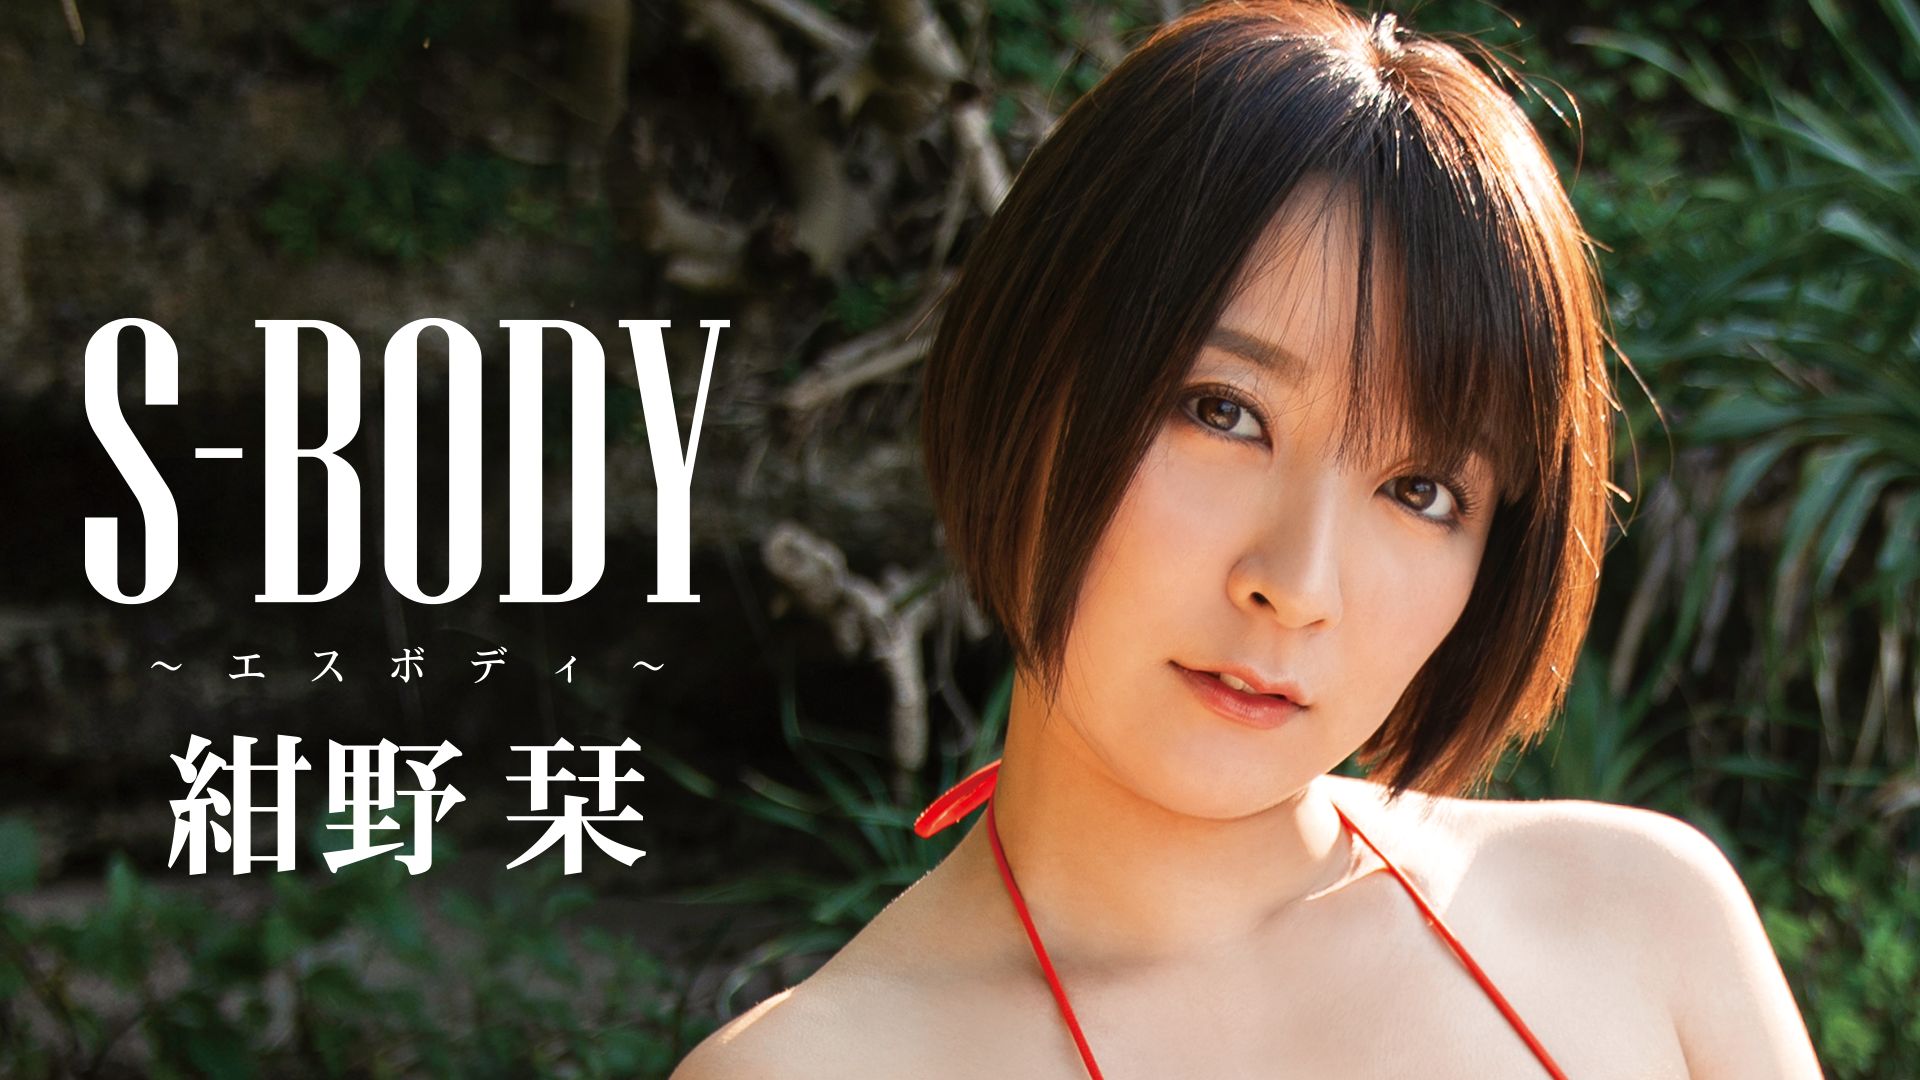 紺野栞 S-BODY